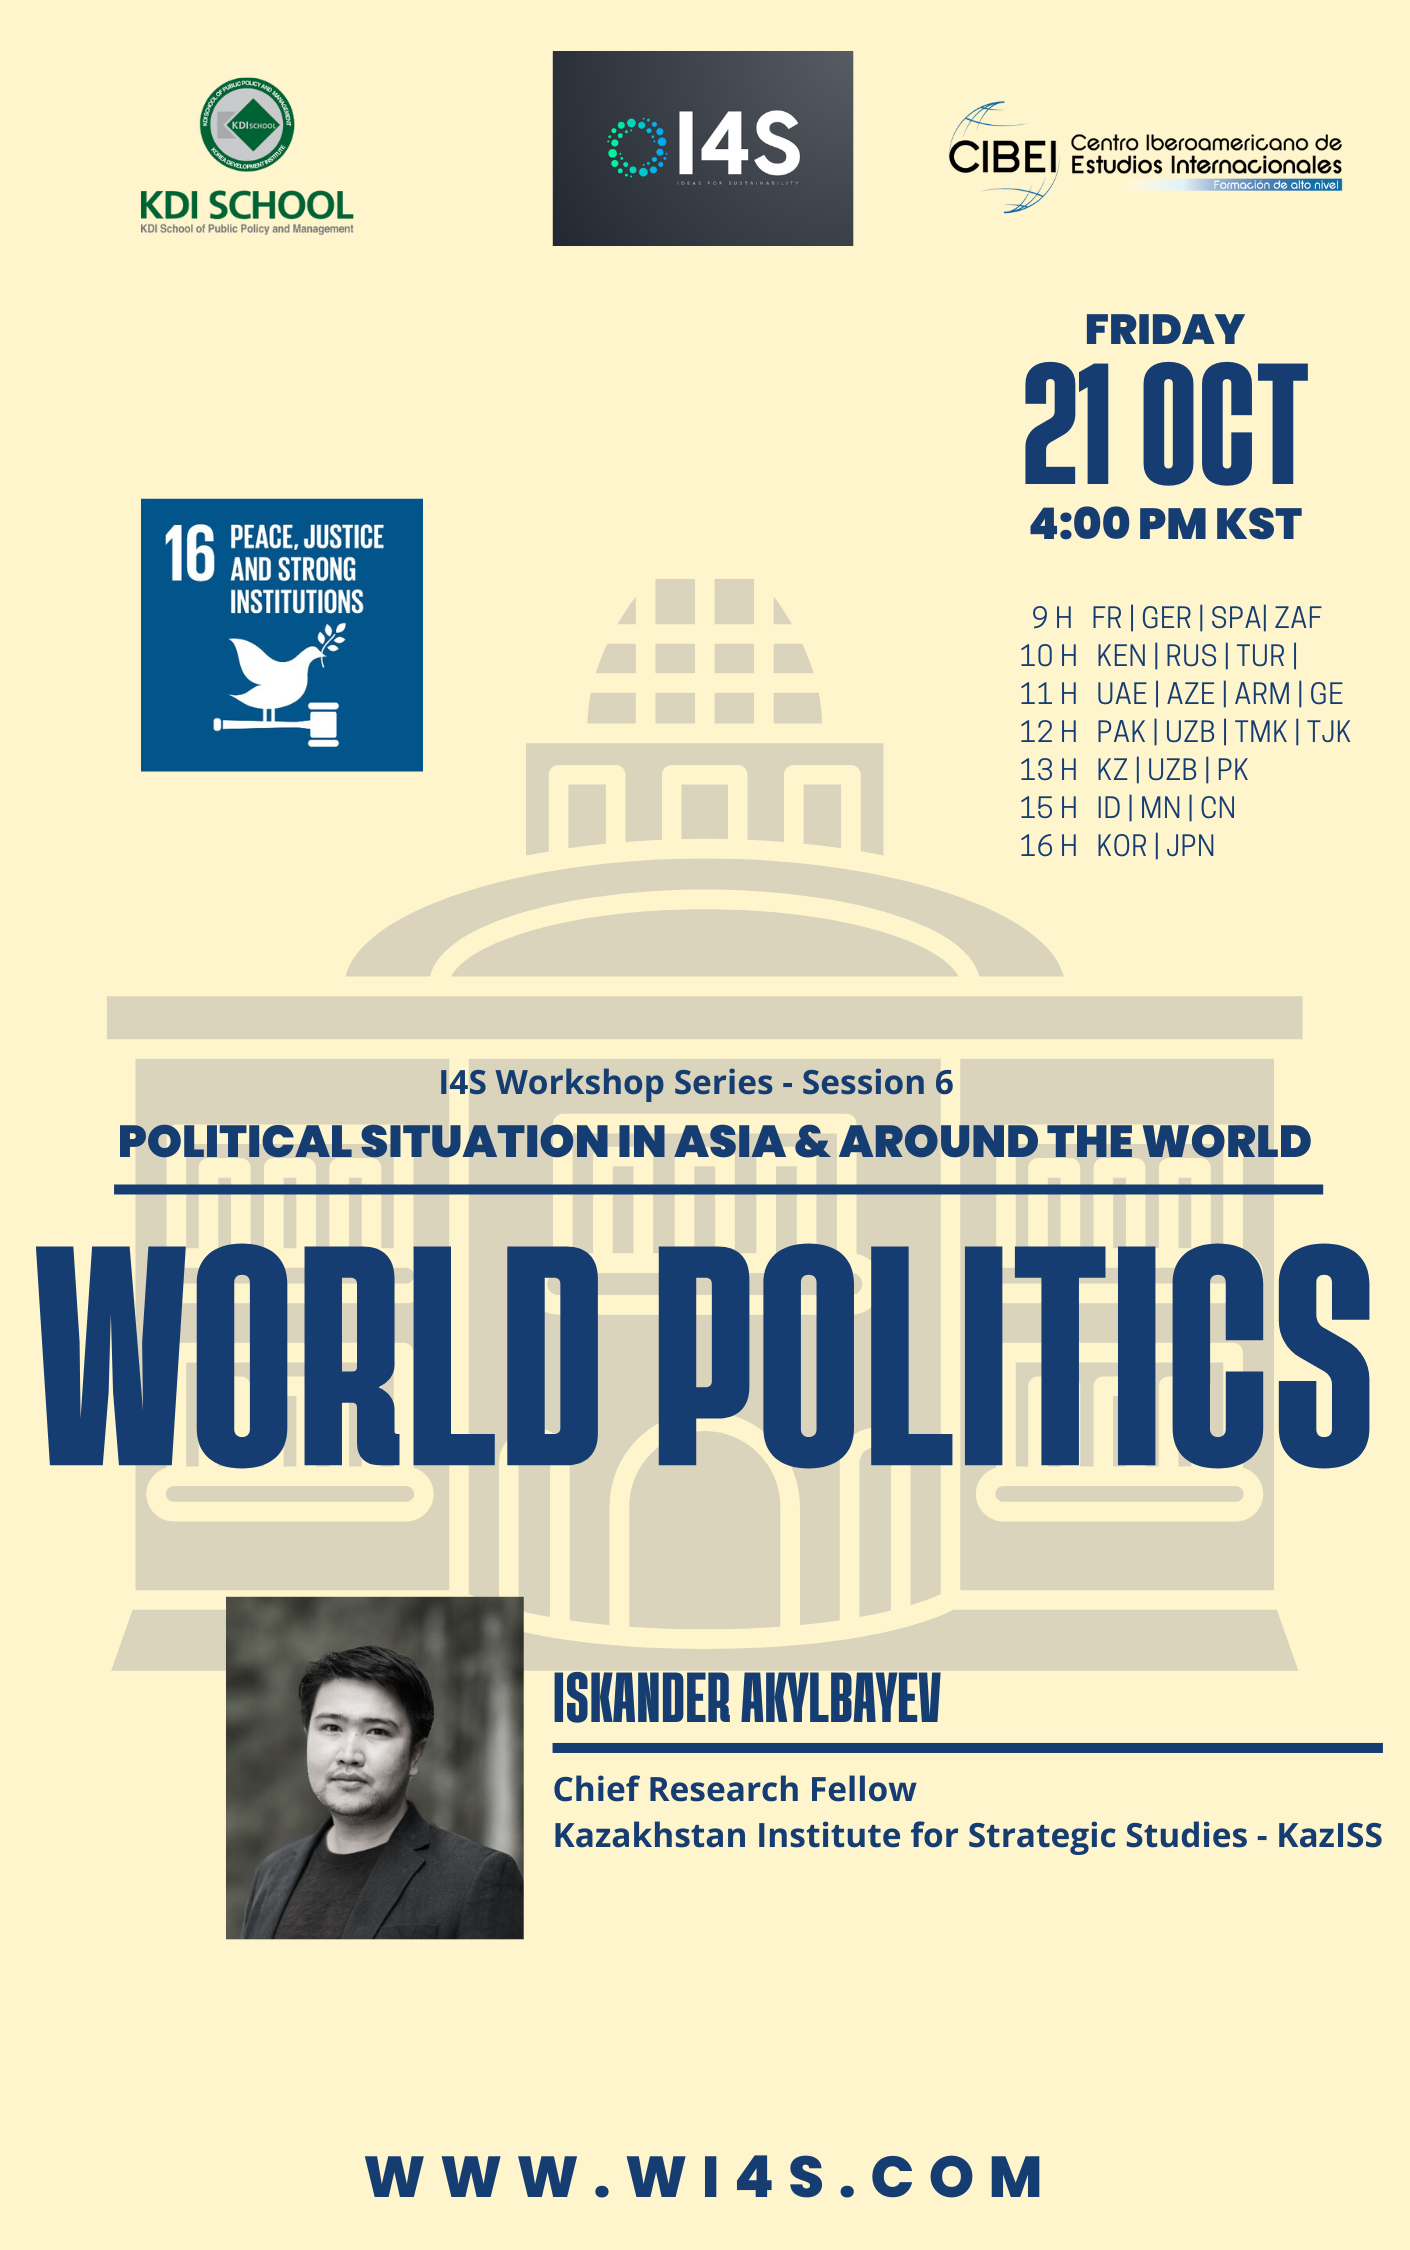 [Working Partner Program] Ideas 4 Sustainability: 6th Workshop on World Politics - SDG 16